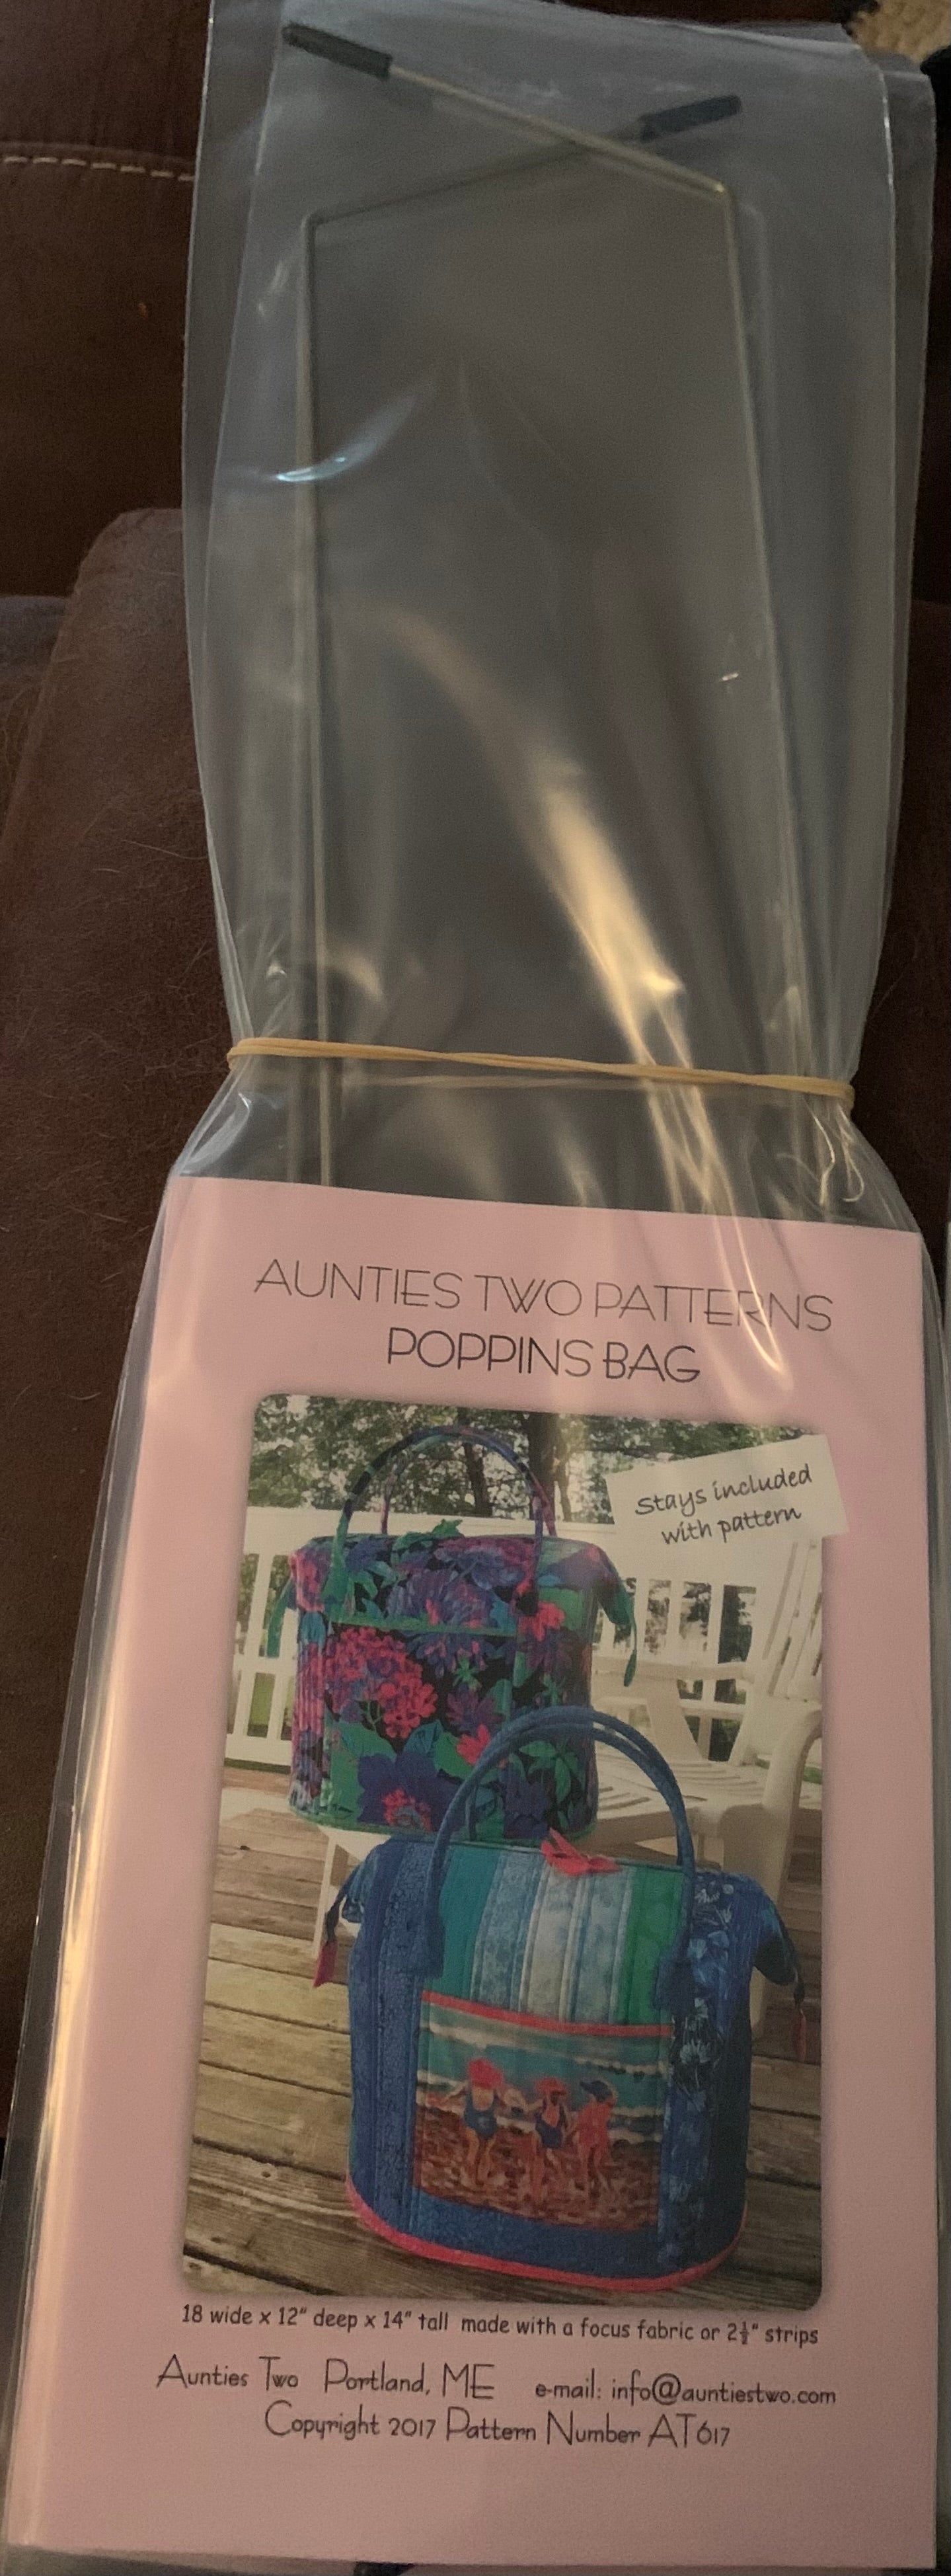 Aunties two pattern - Poppins bag 18w x 12d x 14tall